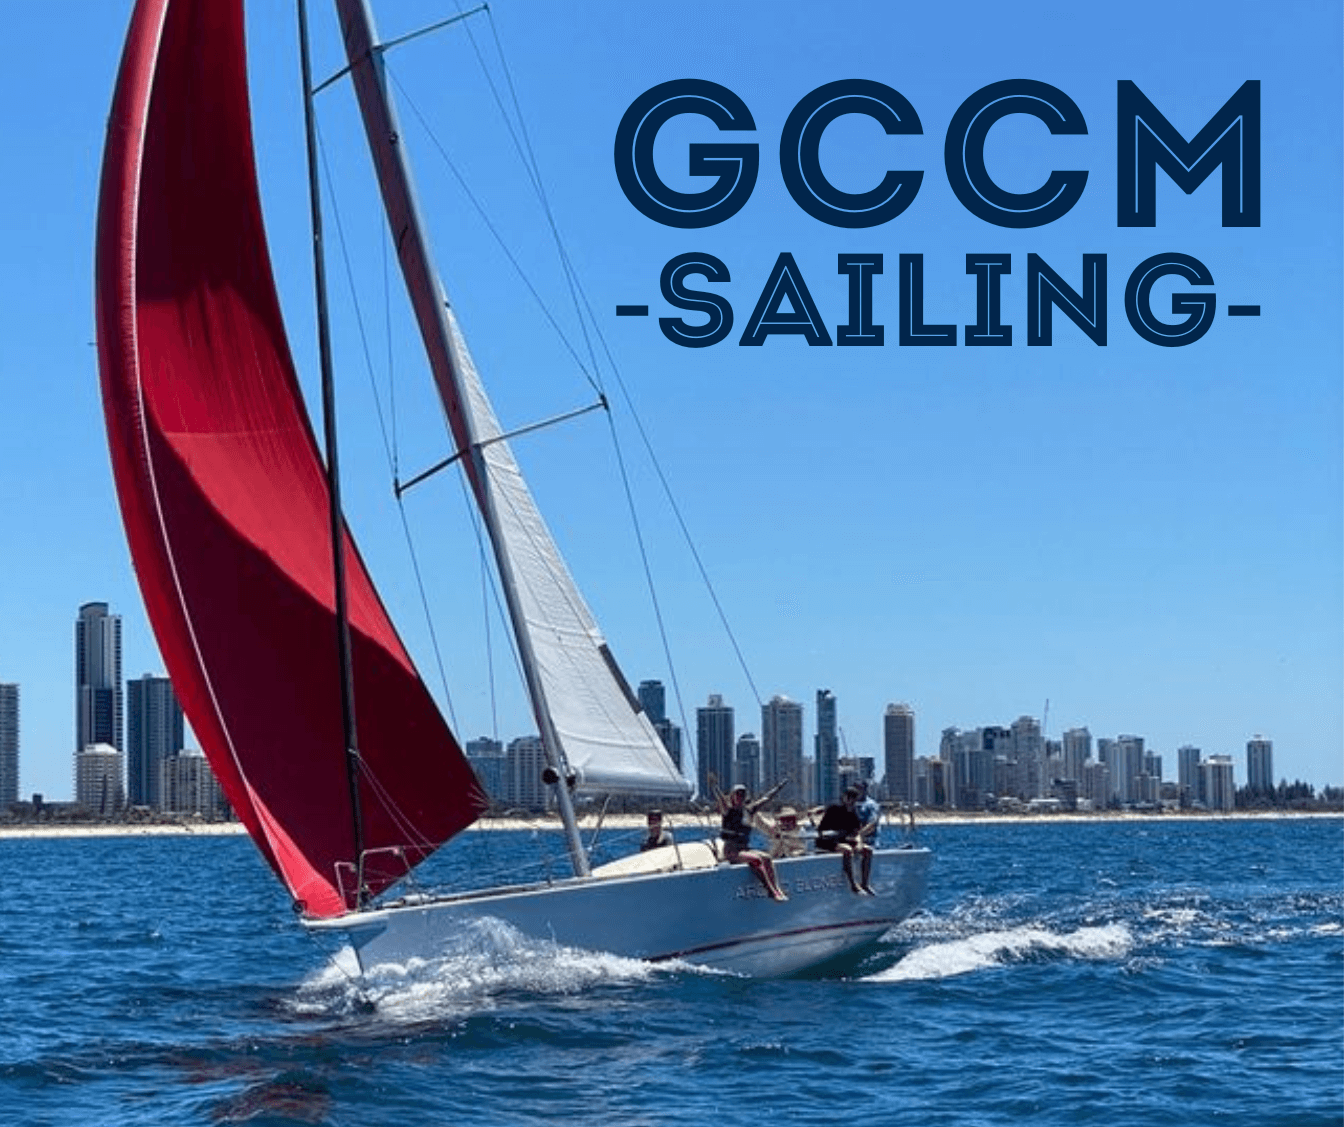 The GCCM Sailing Division